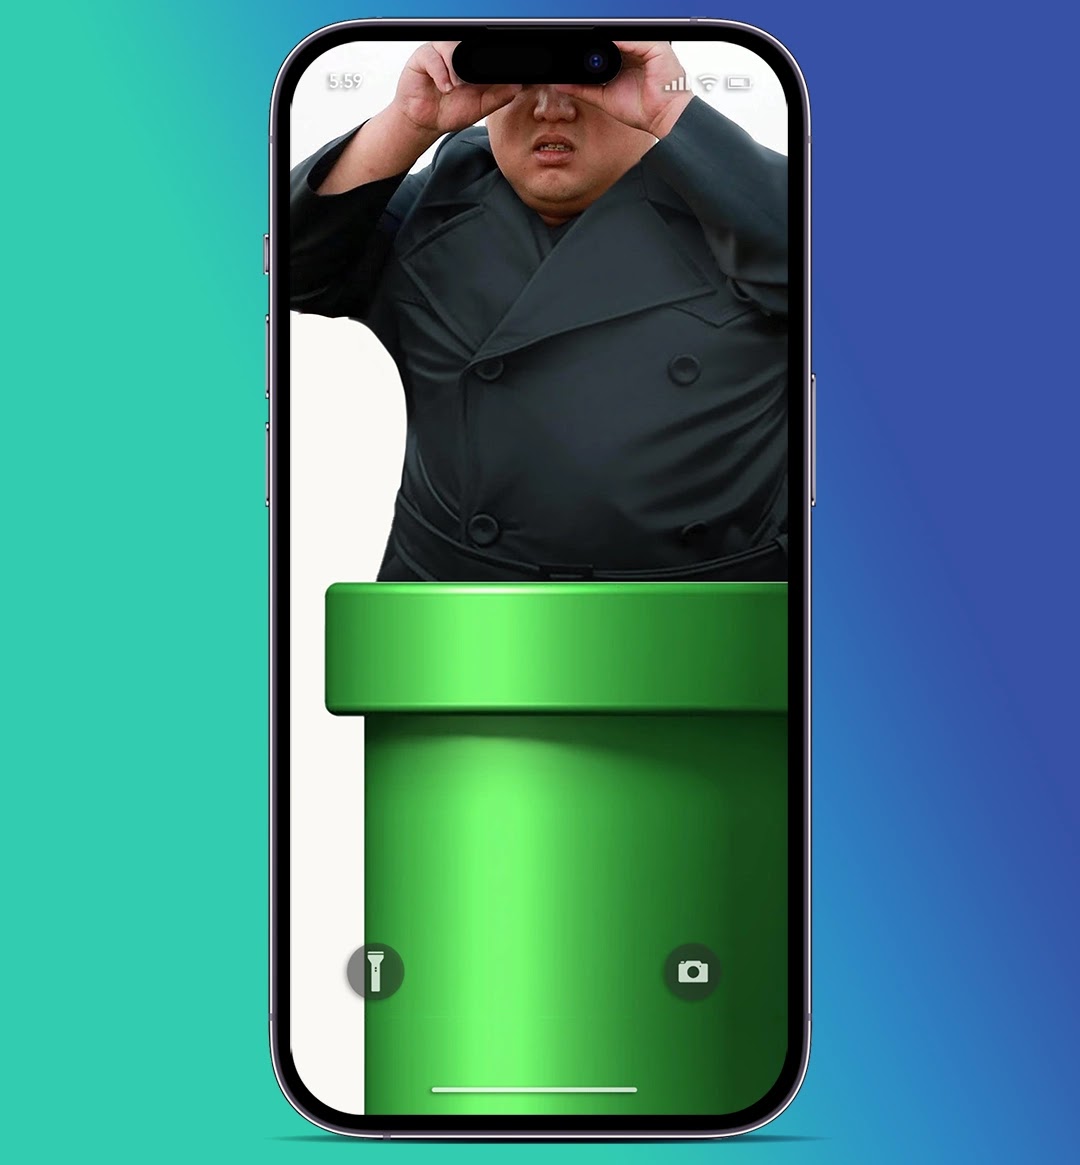 Kim dynamic island iphone wallpaper